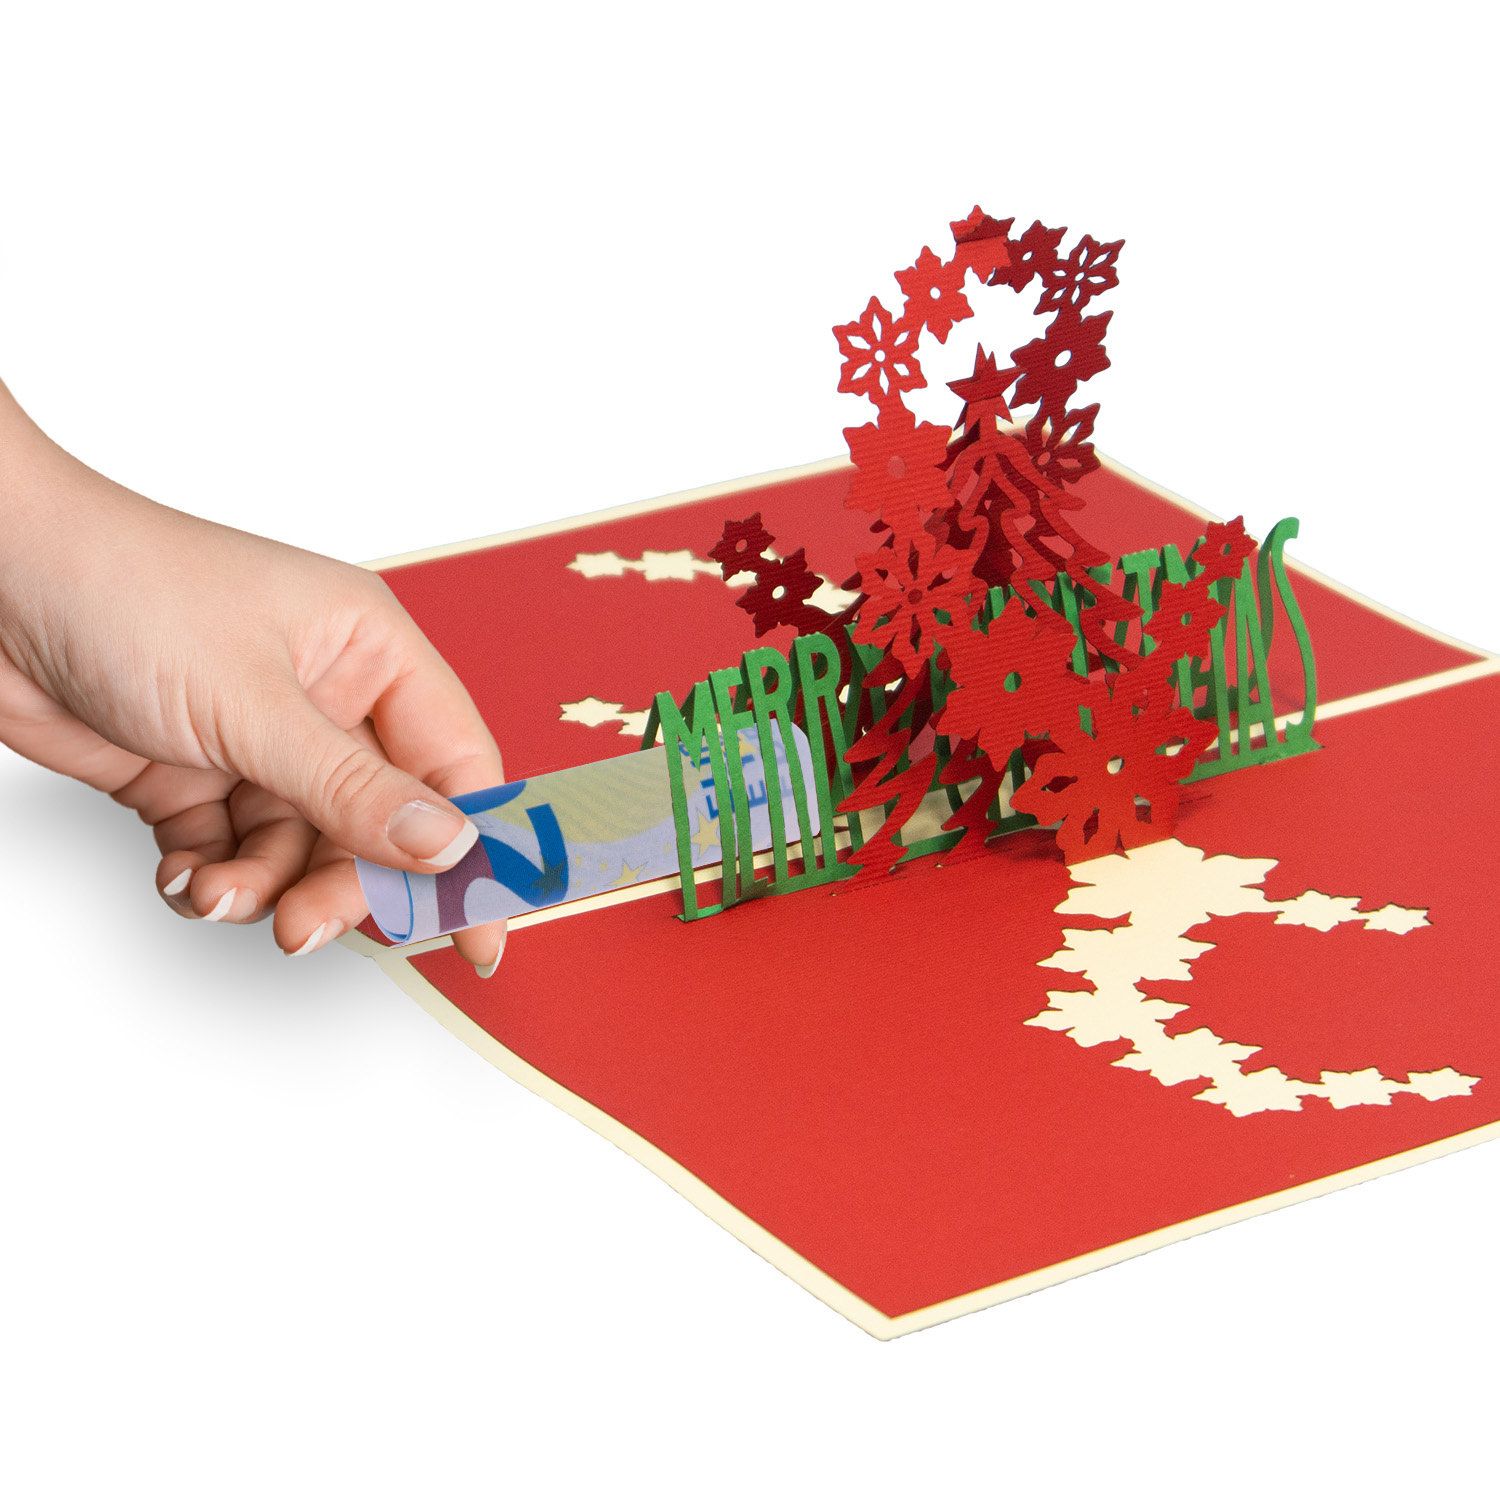 LINPOPUP Pop Up 3D Card, Christmas Card, Greeting Card, Christmas Tree Lettering, LIN17722, LINPopUp®, N400